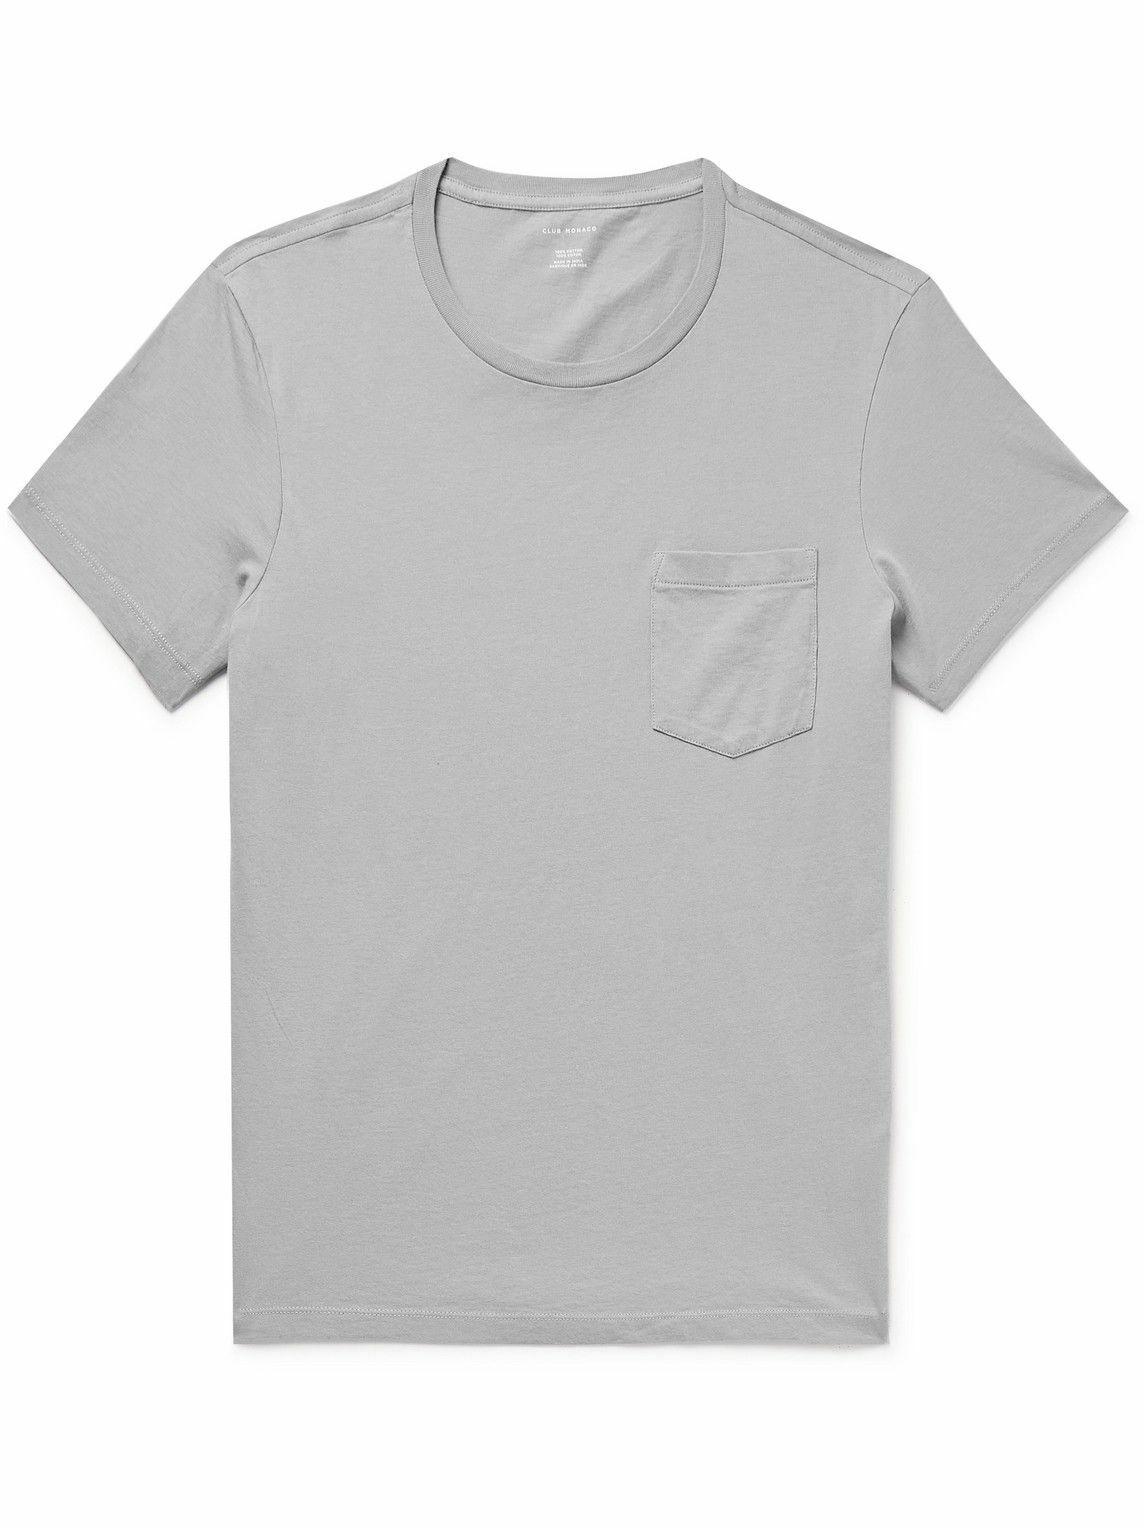 Club Monaco - Williams Cotton-Jersey T-Shirt - Gray Club Monaco